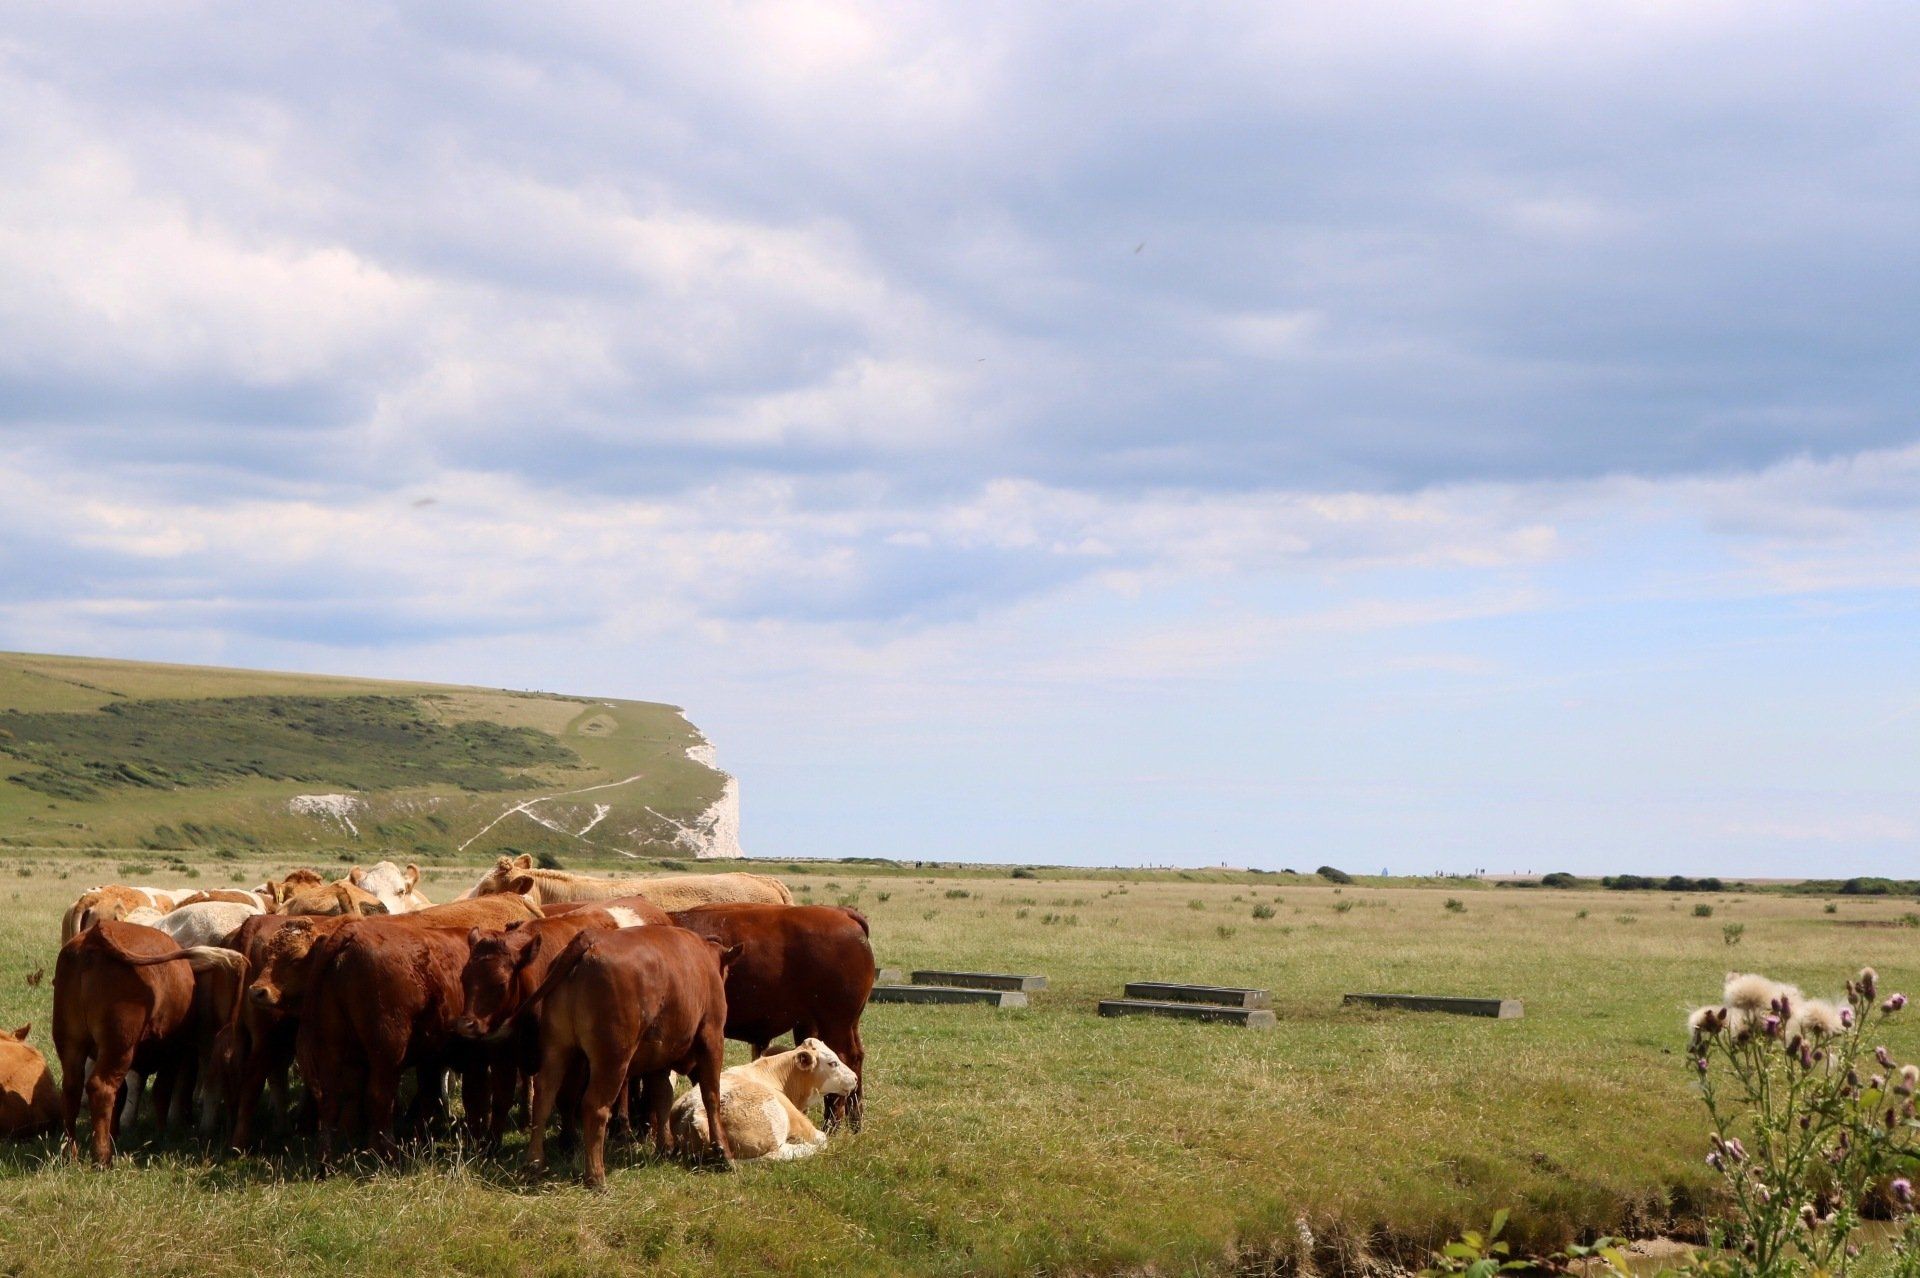 Cows SOuth Downs Sussex, azalia molina, fotografia, photography